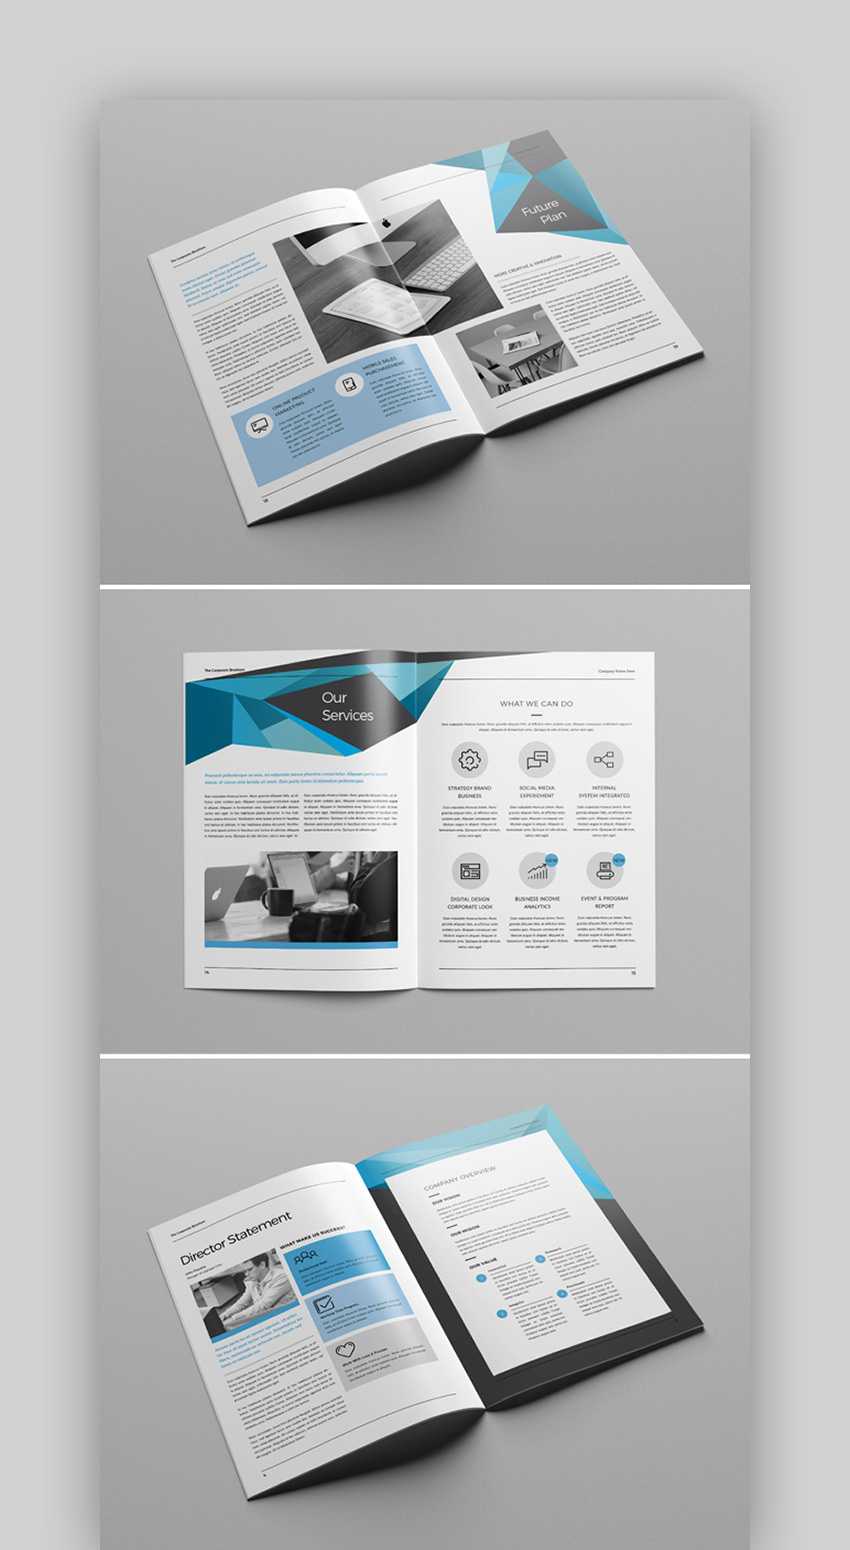 30 Best Indesign Brochure Templates - Creative Business Regarding Adobe Indesign Brochure Templates